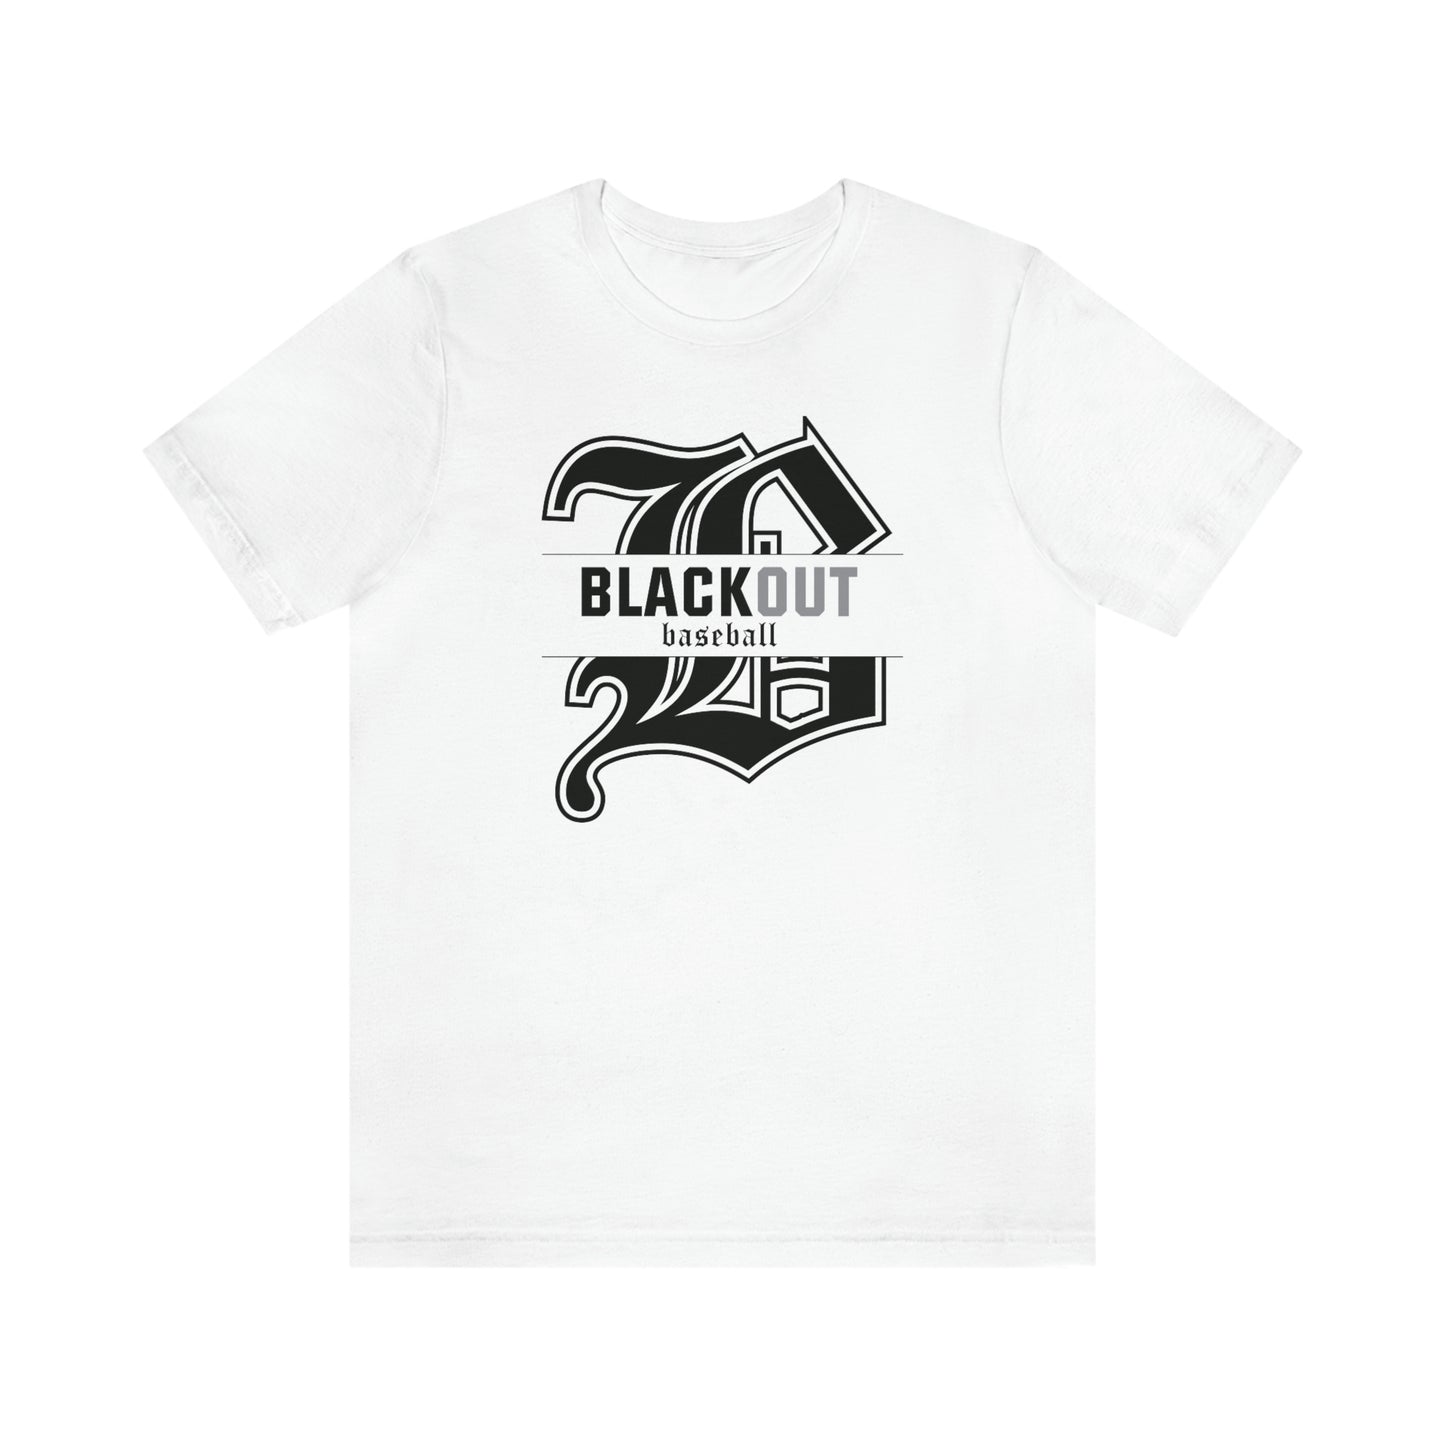 ADULT - PERSONALIZED Name - "Blackout Baseball" 100% Cotton T-Shirt - (Black, White, or Gray)